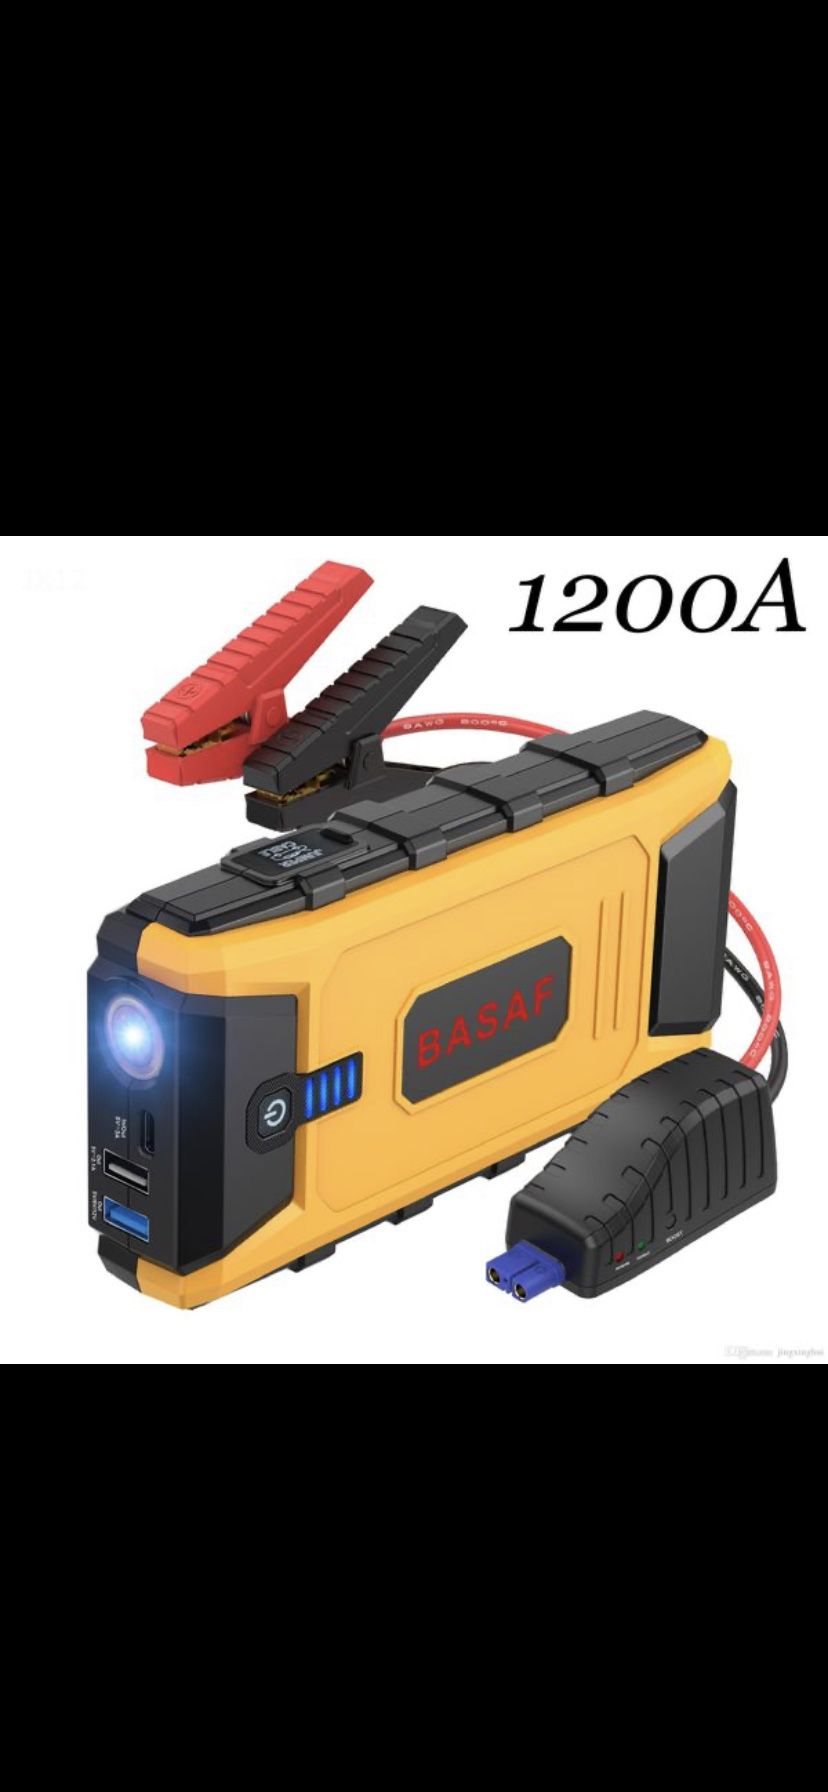 BASAF 1200A Car Jump Starter,Portable Car Battery Booster, 12V Emergency Car Power Bank, Battery Jumper, Car Jumper